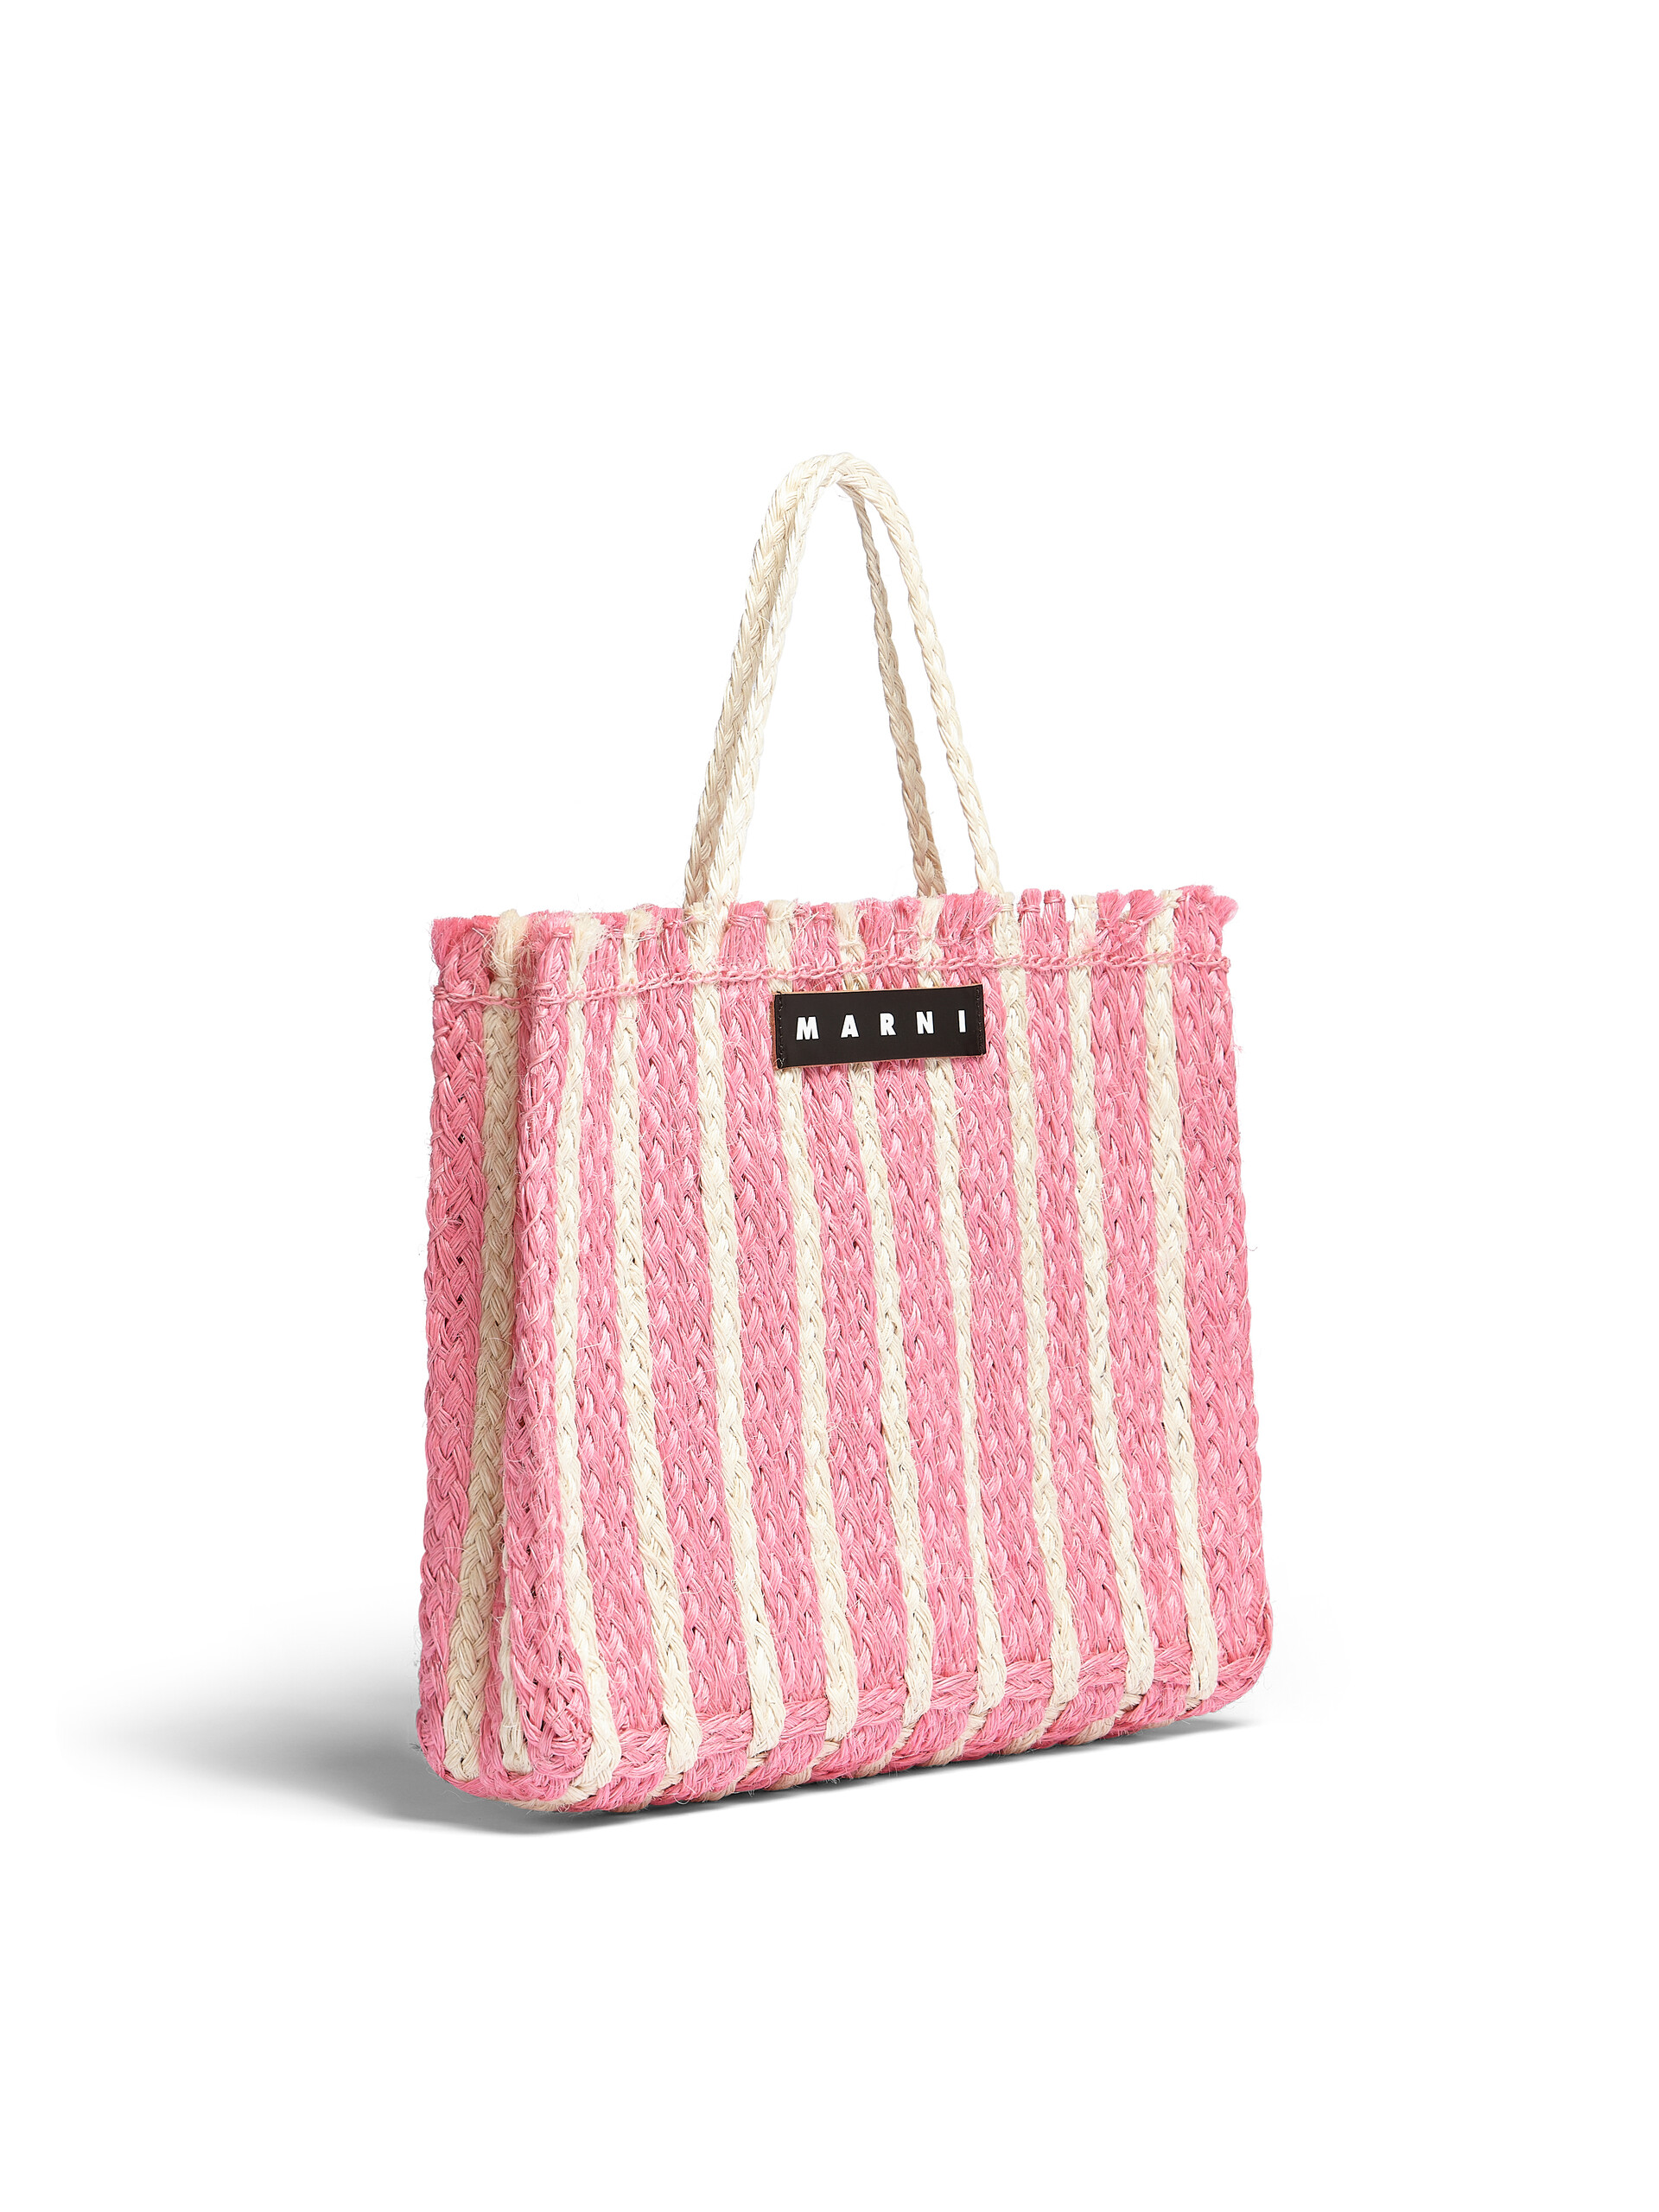 MARNI MARKET bag in pink natural fiber - Bags - Image 2